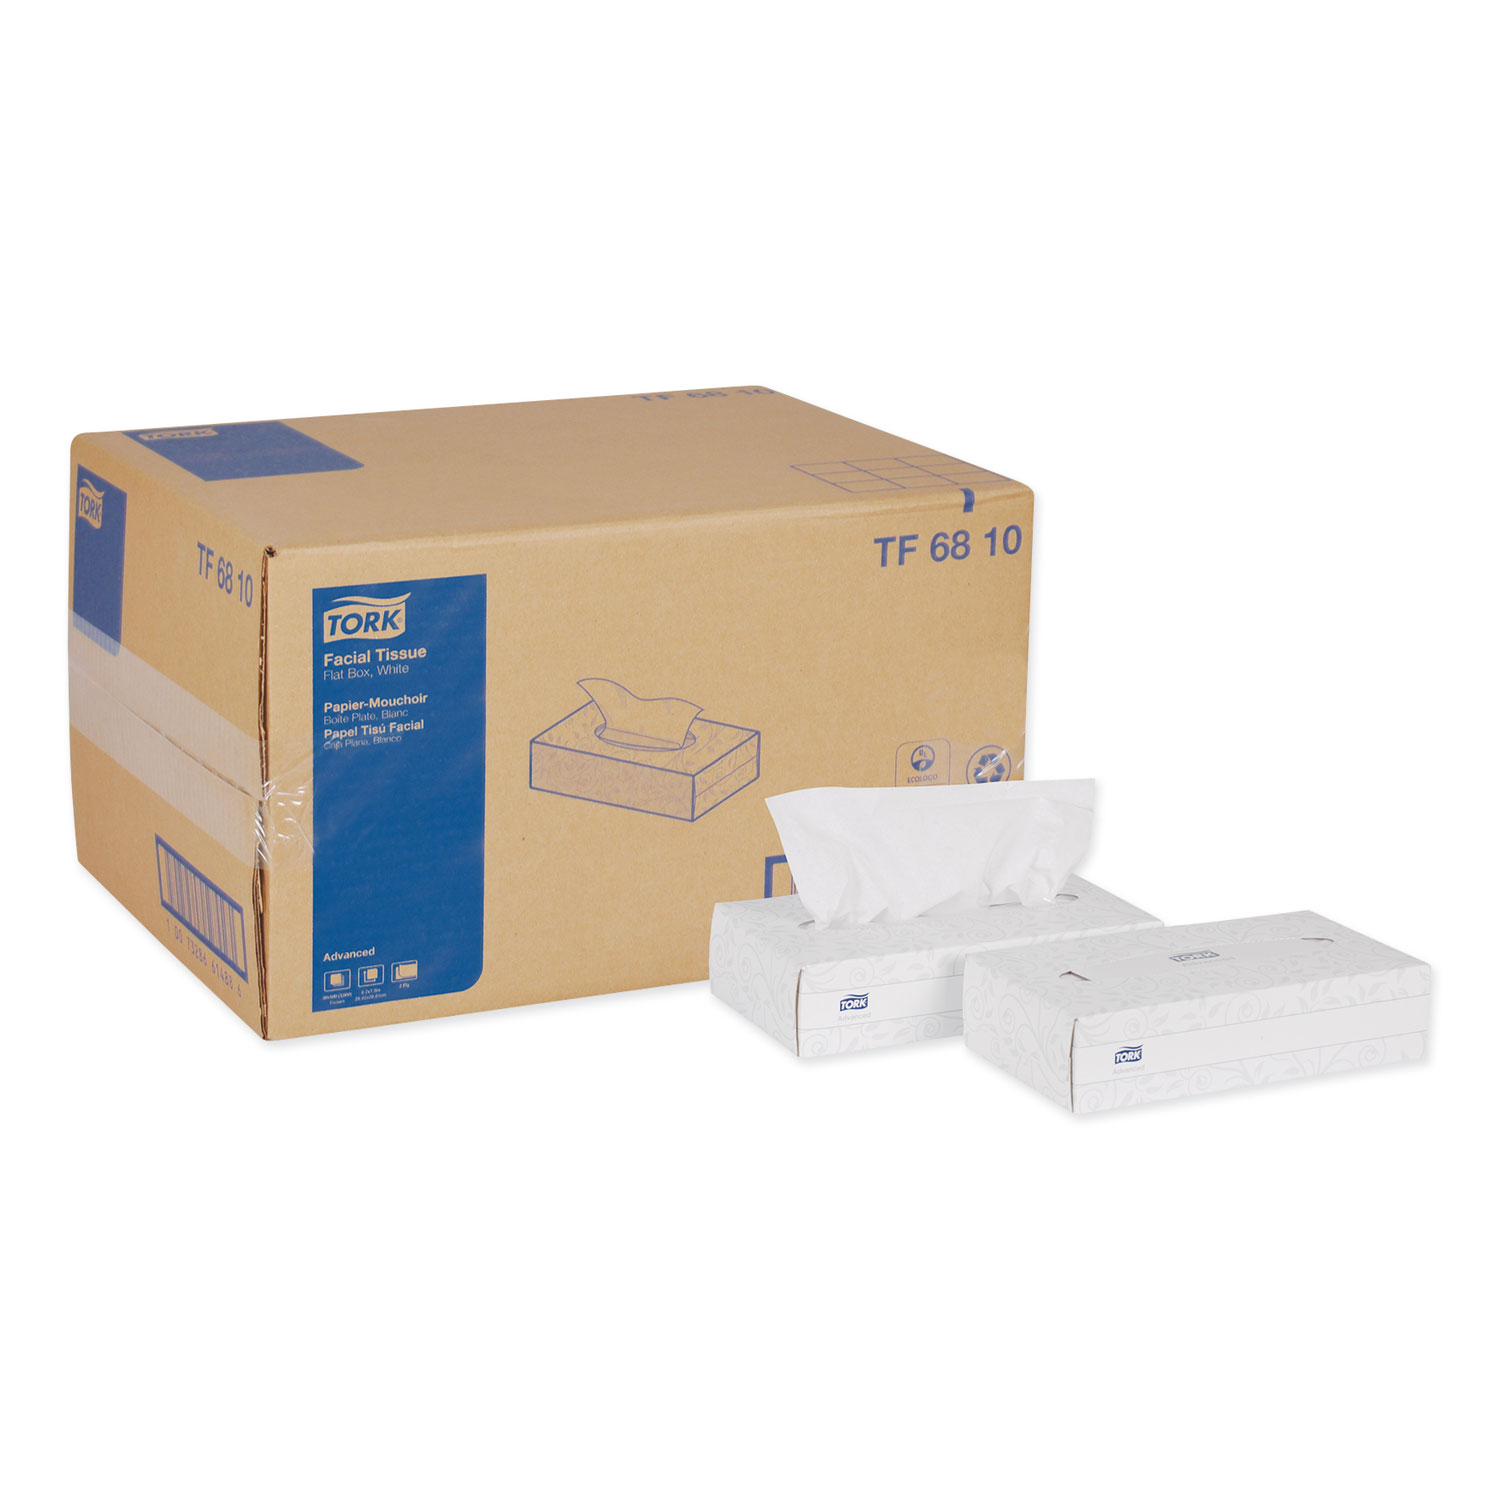  Tork TF6810 Advanced Facial Tissue, 2-Ply, White, Flat Box, 100 Sheets/Box, 30 Boxes/Carton (TRKTF6810) 